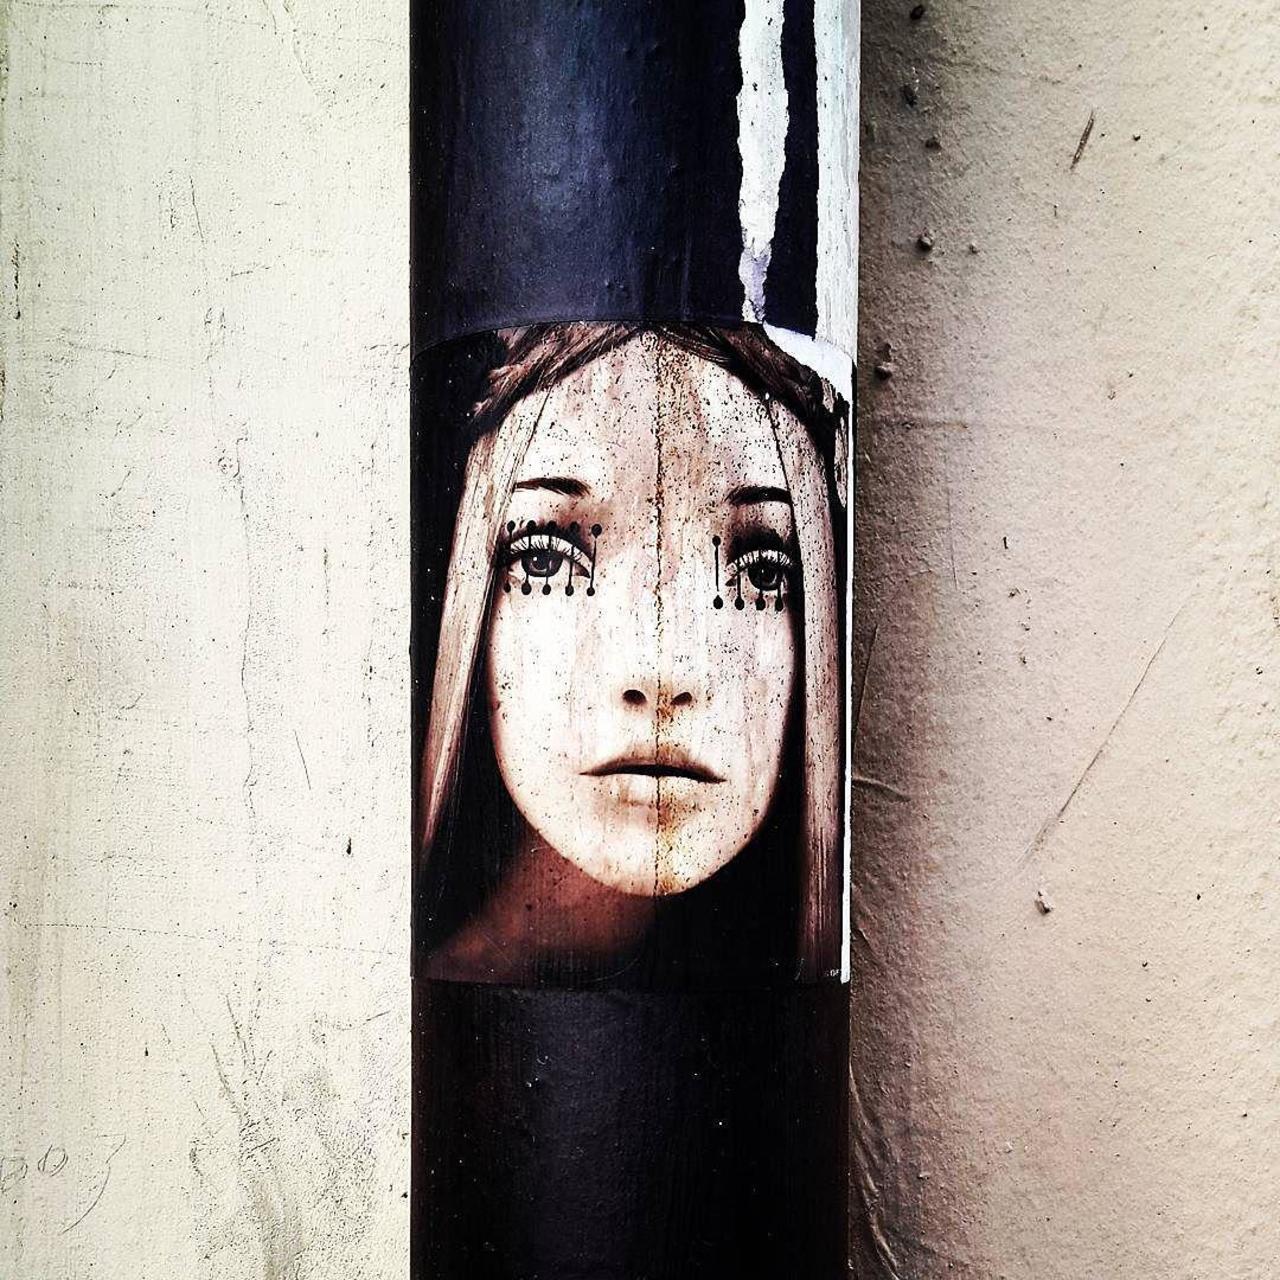 #Paris #graffiti photo by @anne.batellier http://ift.tt/1Mx2qLL #StreetArt http://t.co/TQTicwk2e0